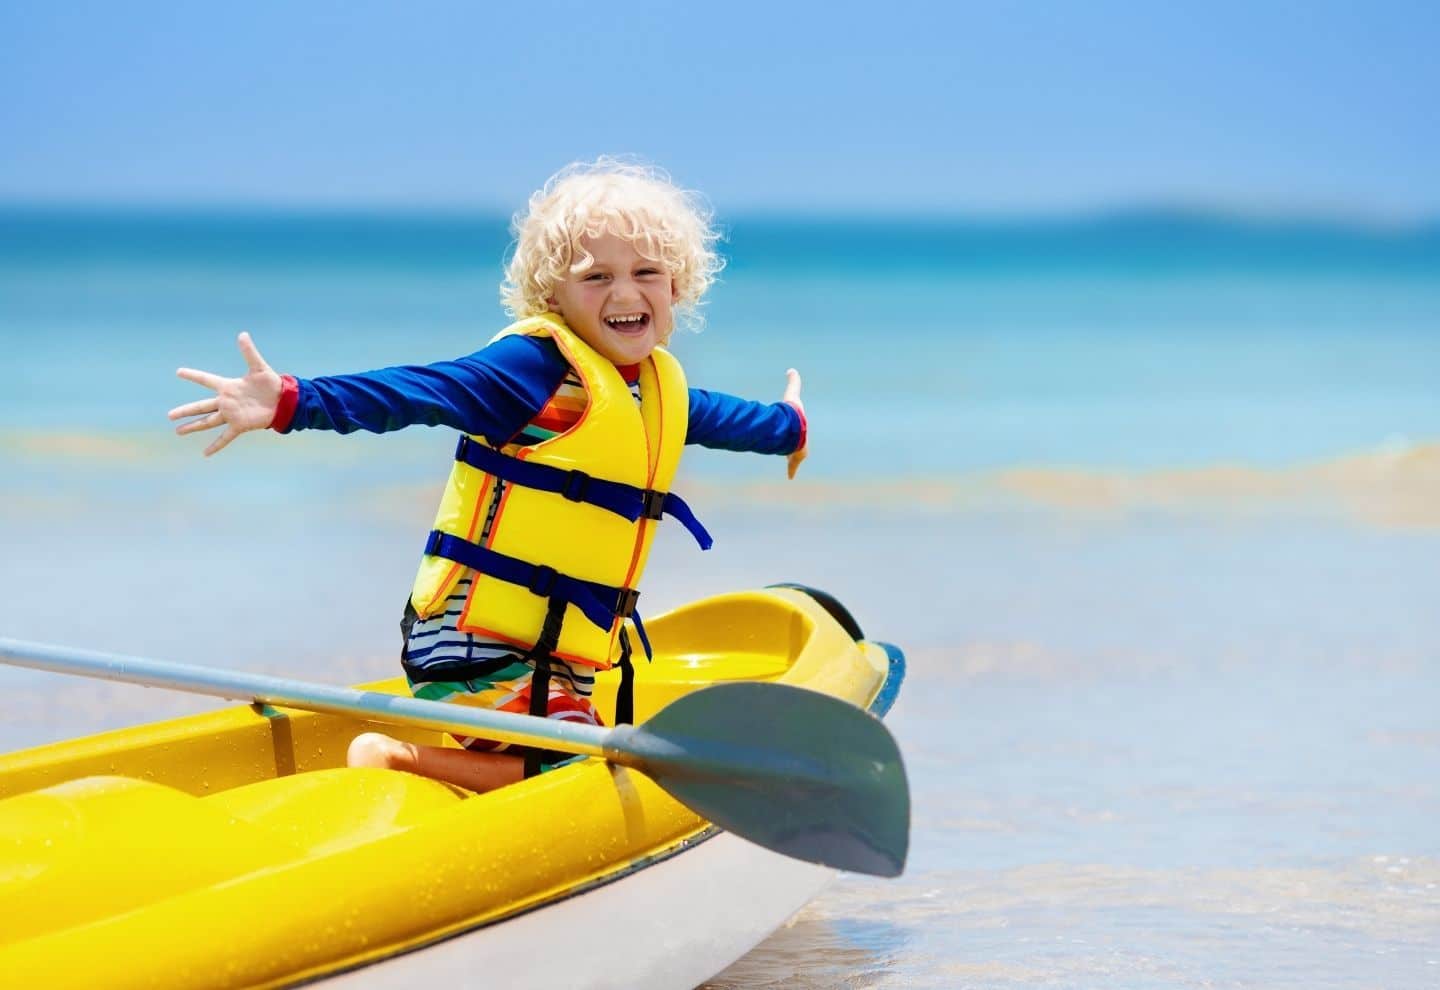 Happy kid on a yellow kayak